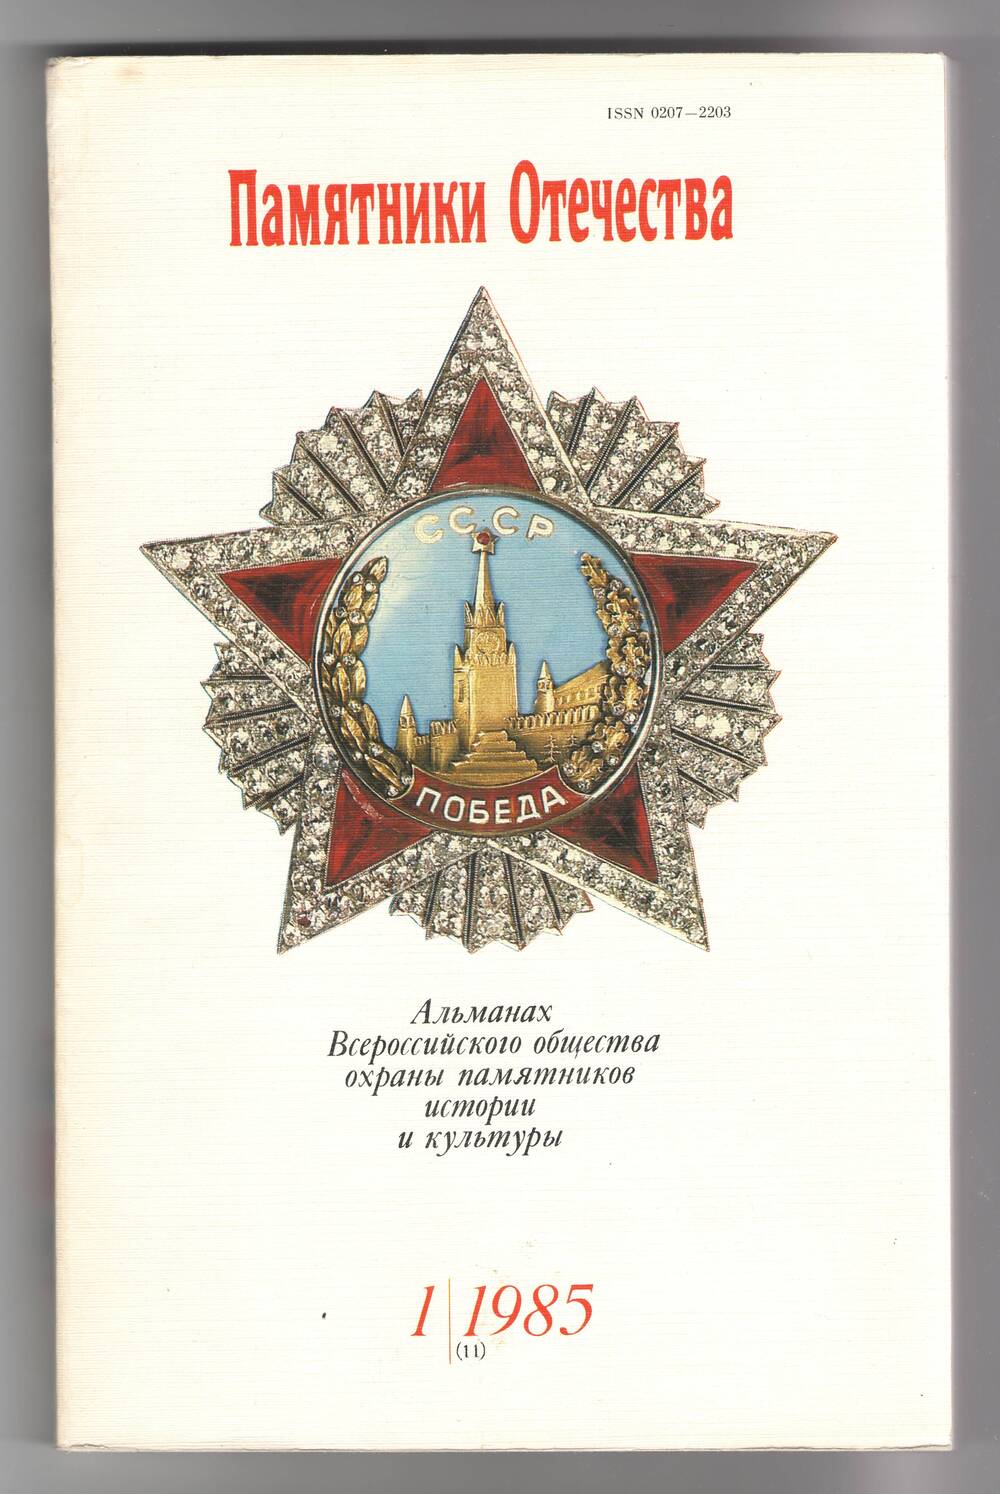 Журнал. Альманах «Памятники Отечества» №1,(11) 1985 г.